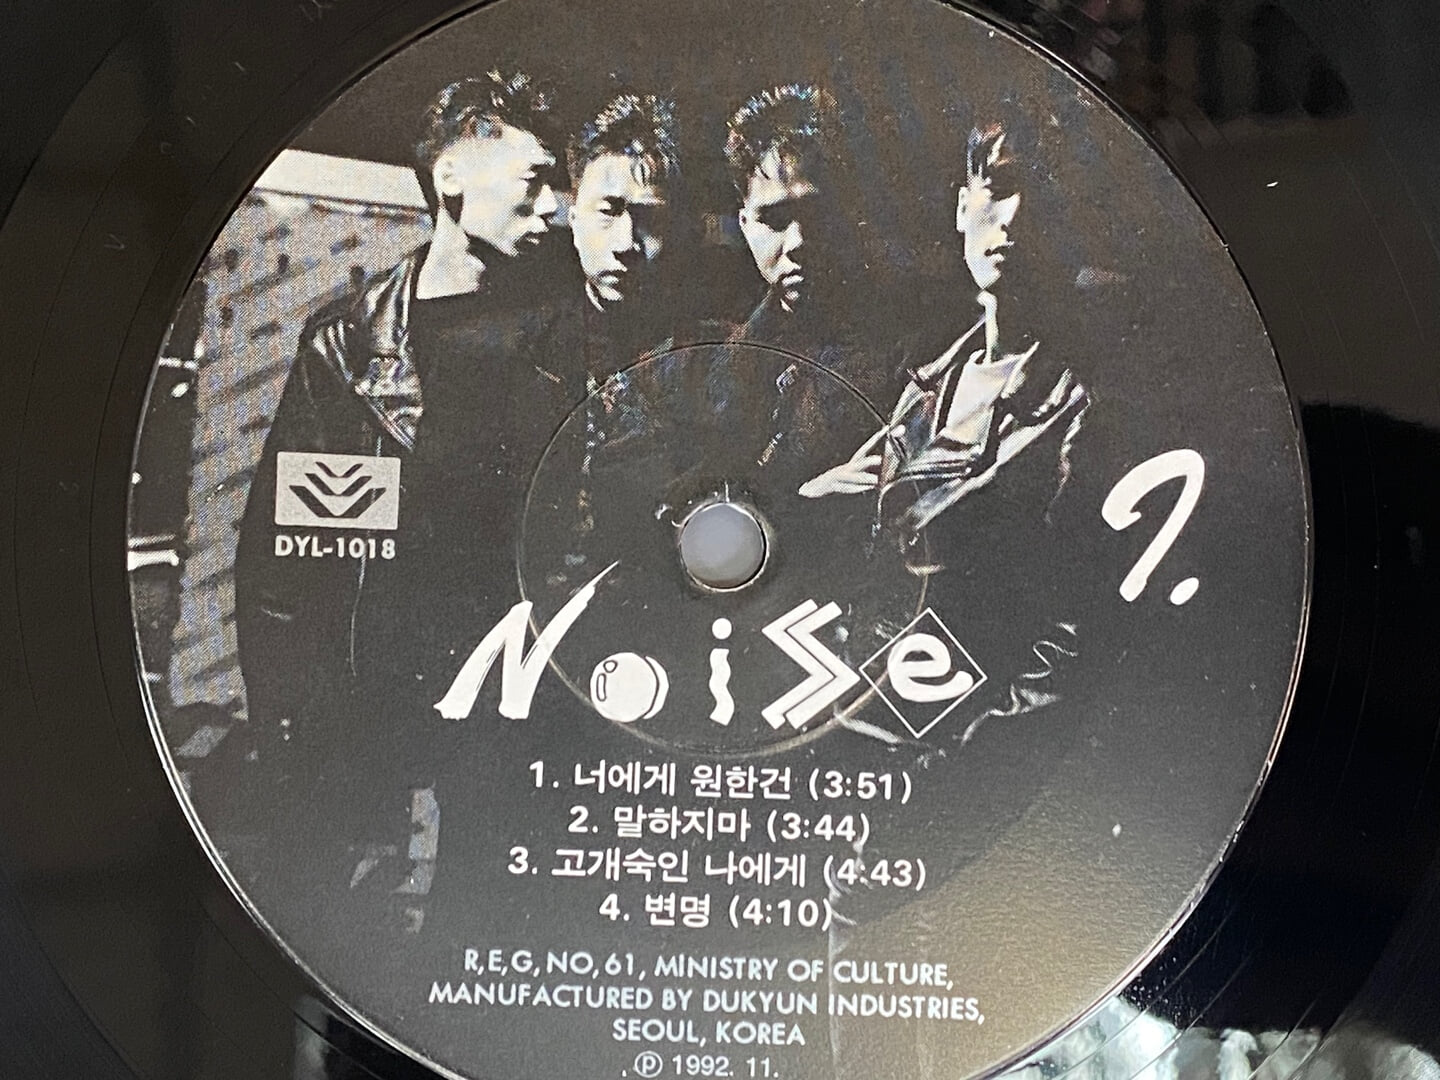 [LP] 노이즈 (Noise) - 1집 변명,너에게 원한건 LP [덕윤산업 DYL-1018]